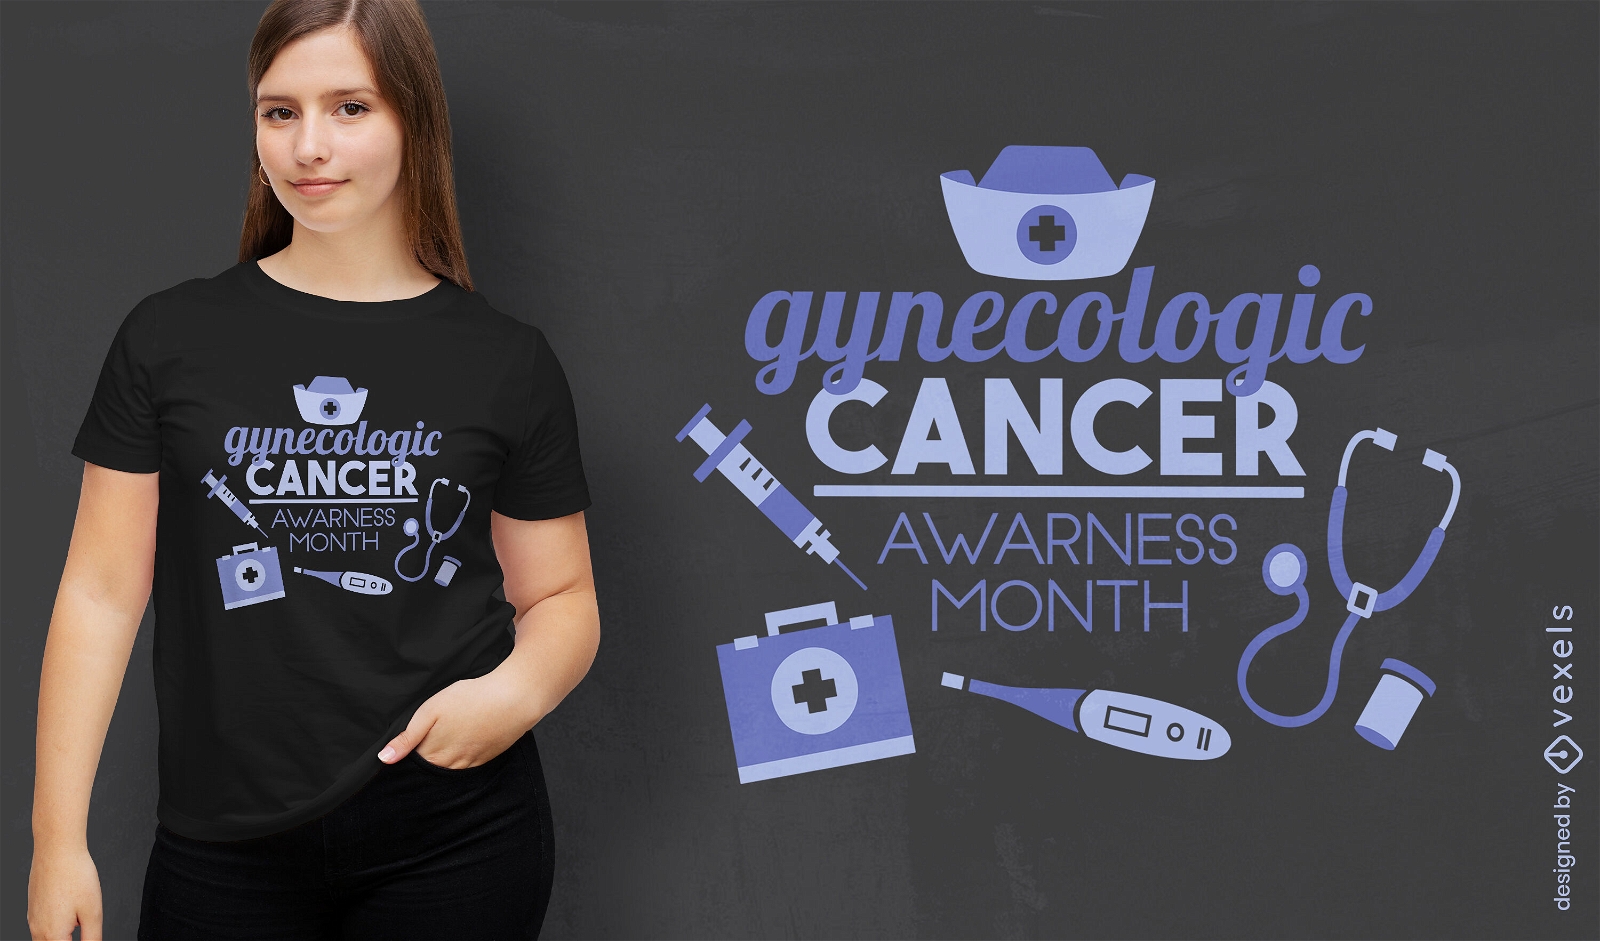 Gynecologic cancer awarness t-shirt design